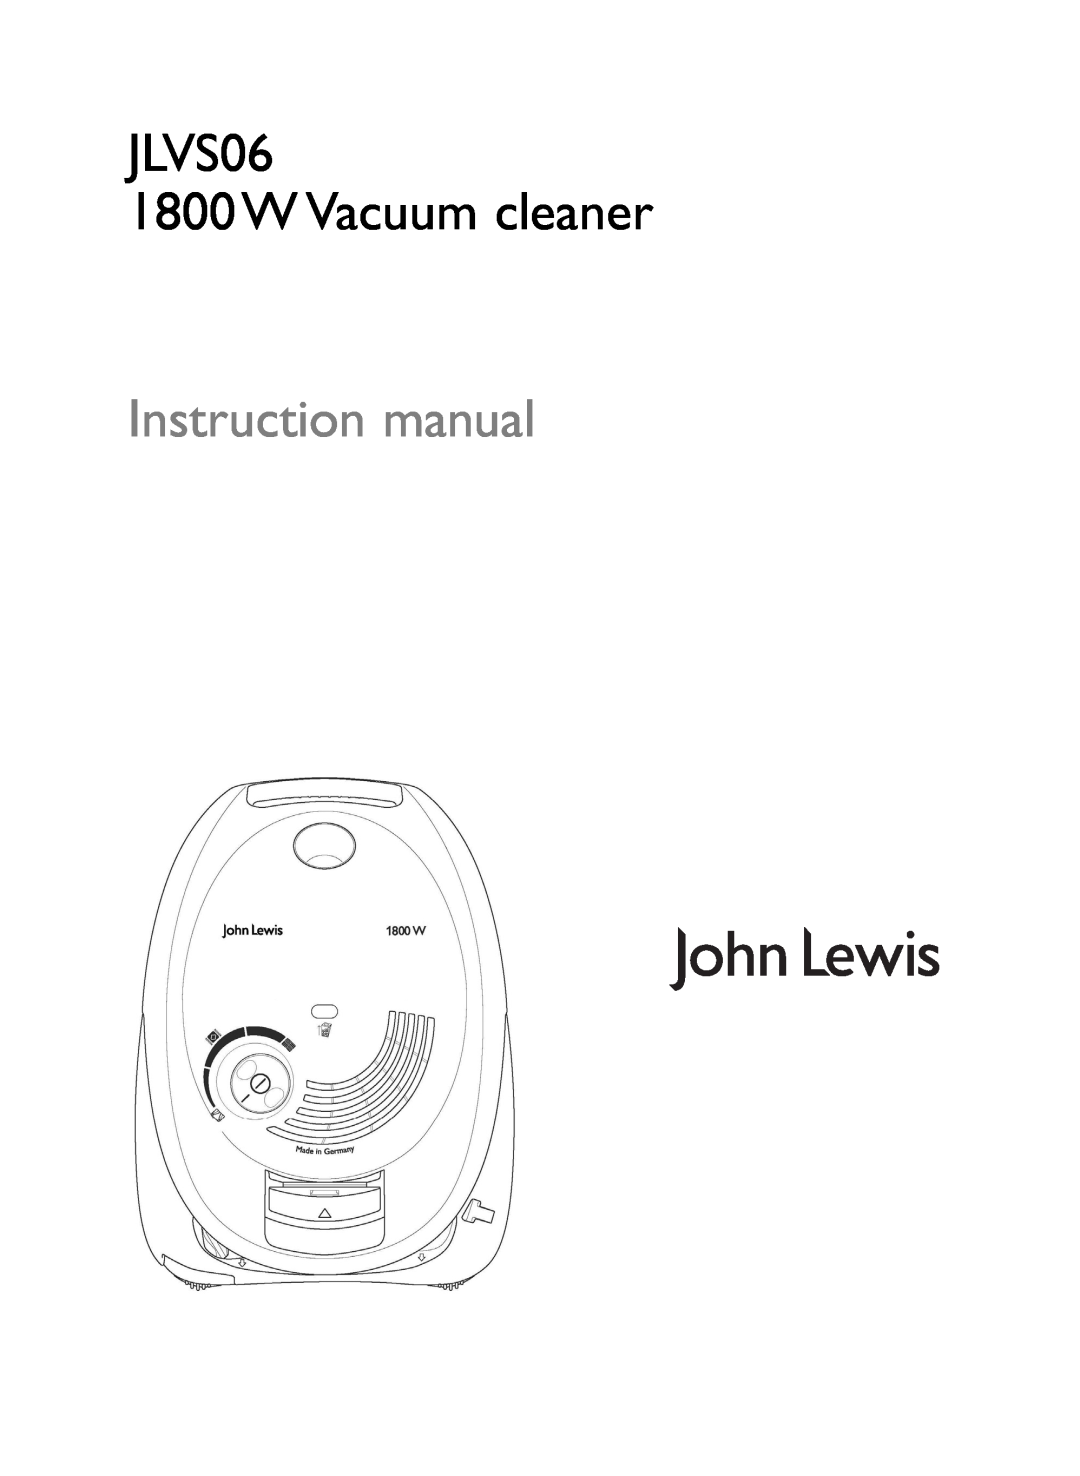 John Lewis instruction manual JLVS06 1800W Vacuum cleaner 